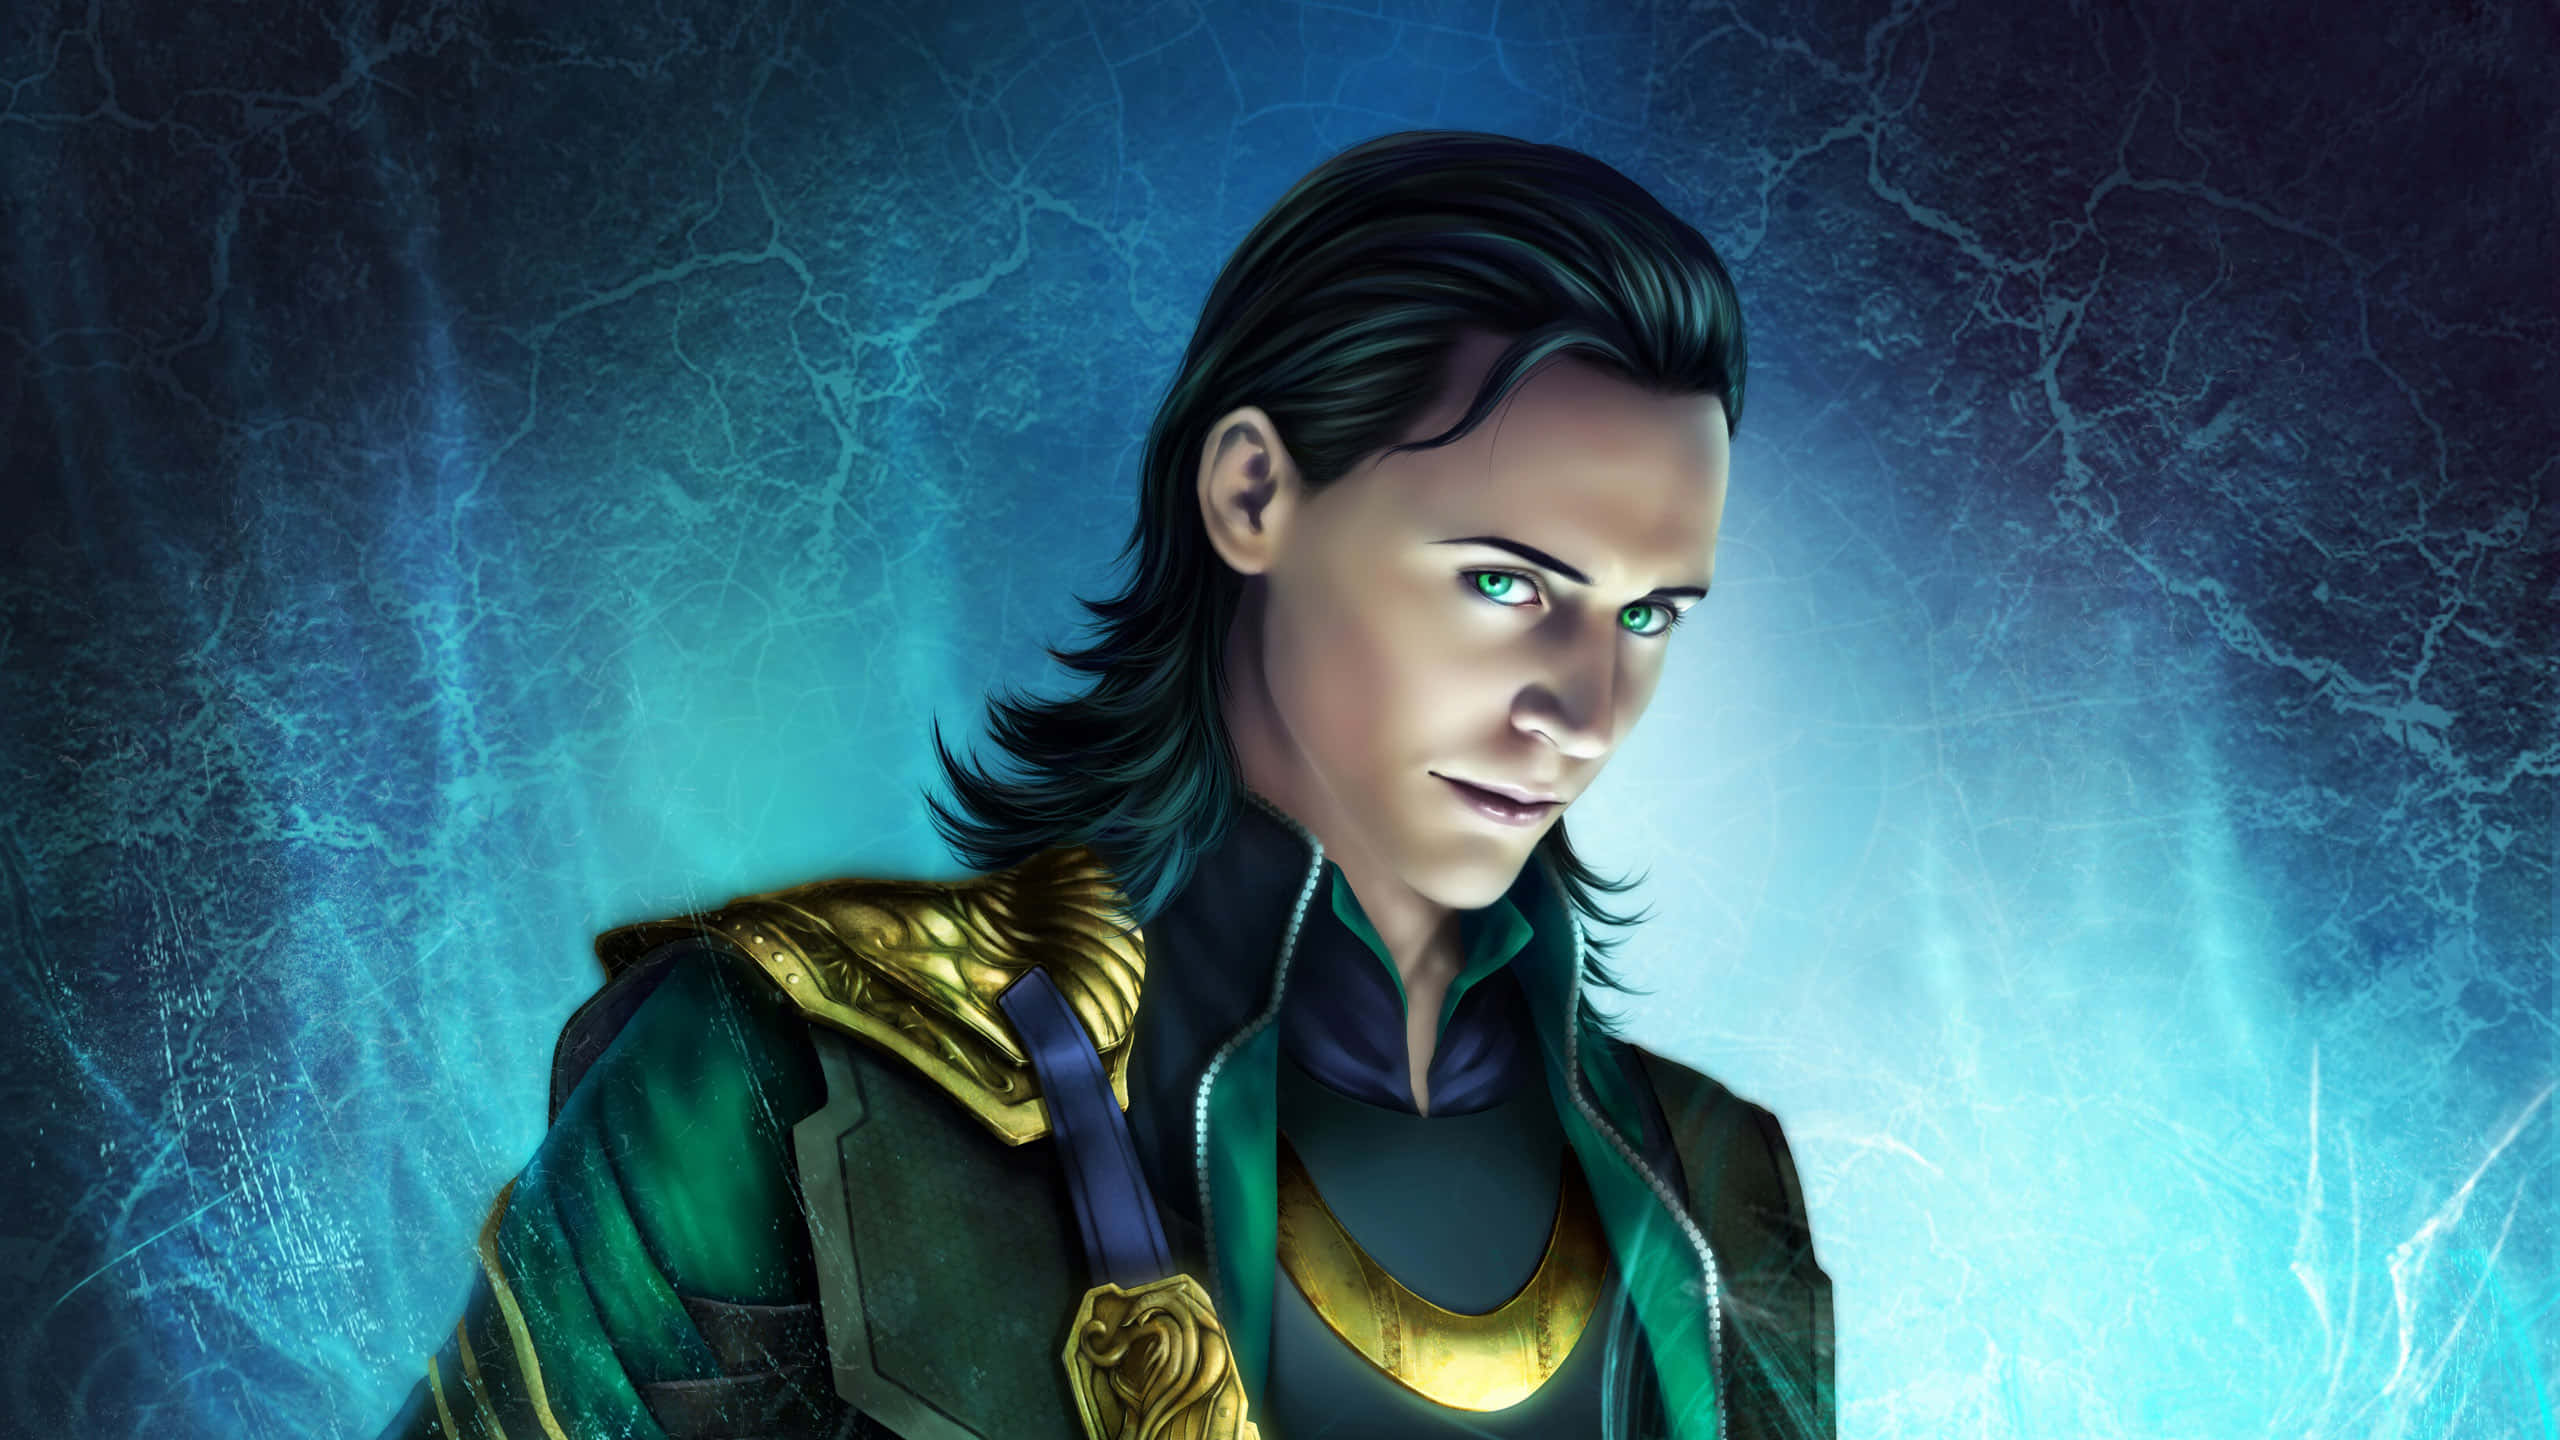 The Cunning God of Mischief, Loki